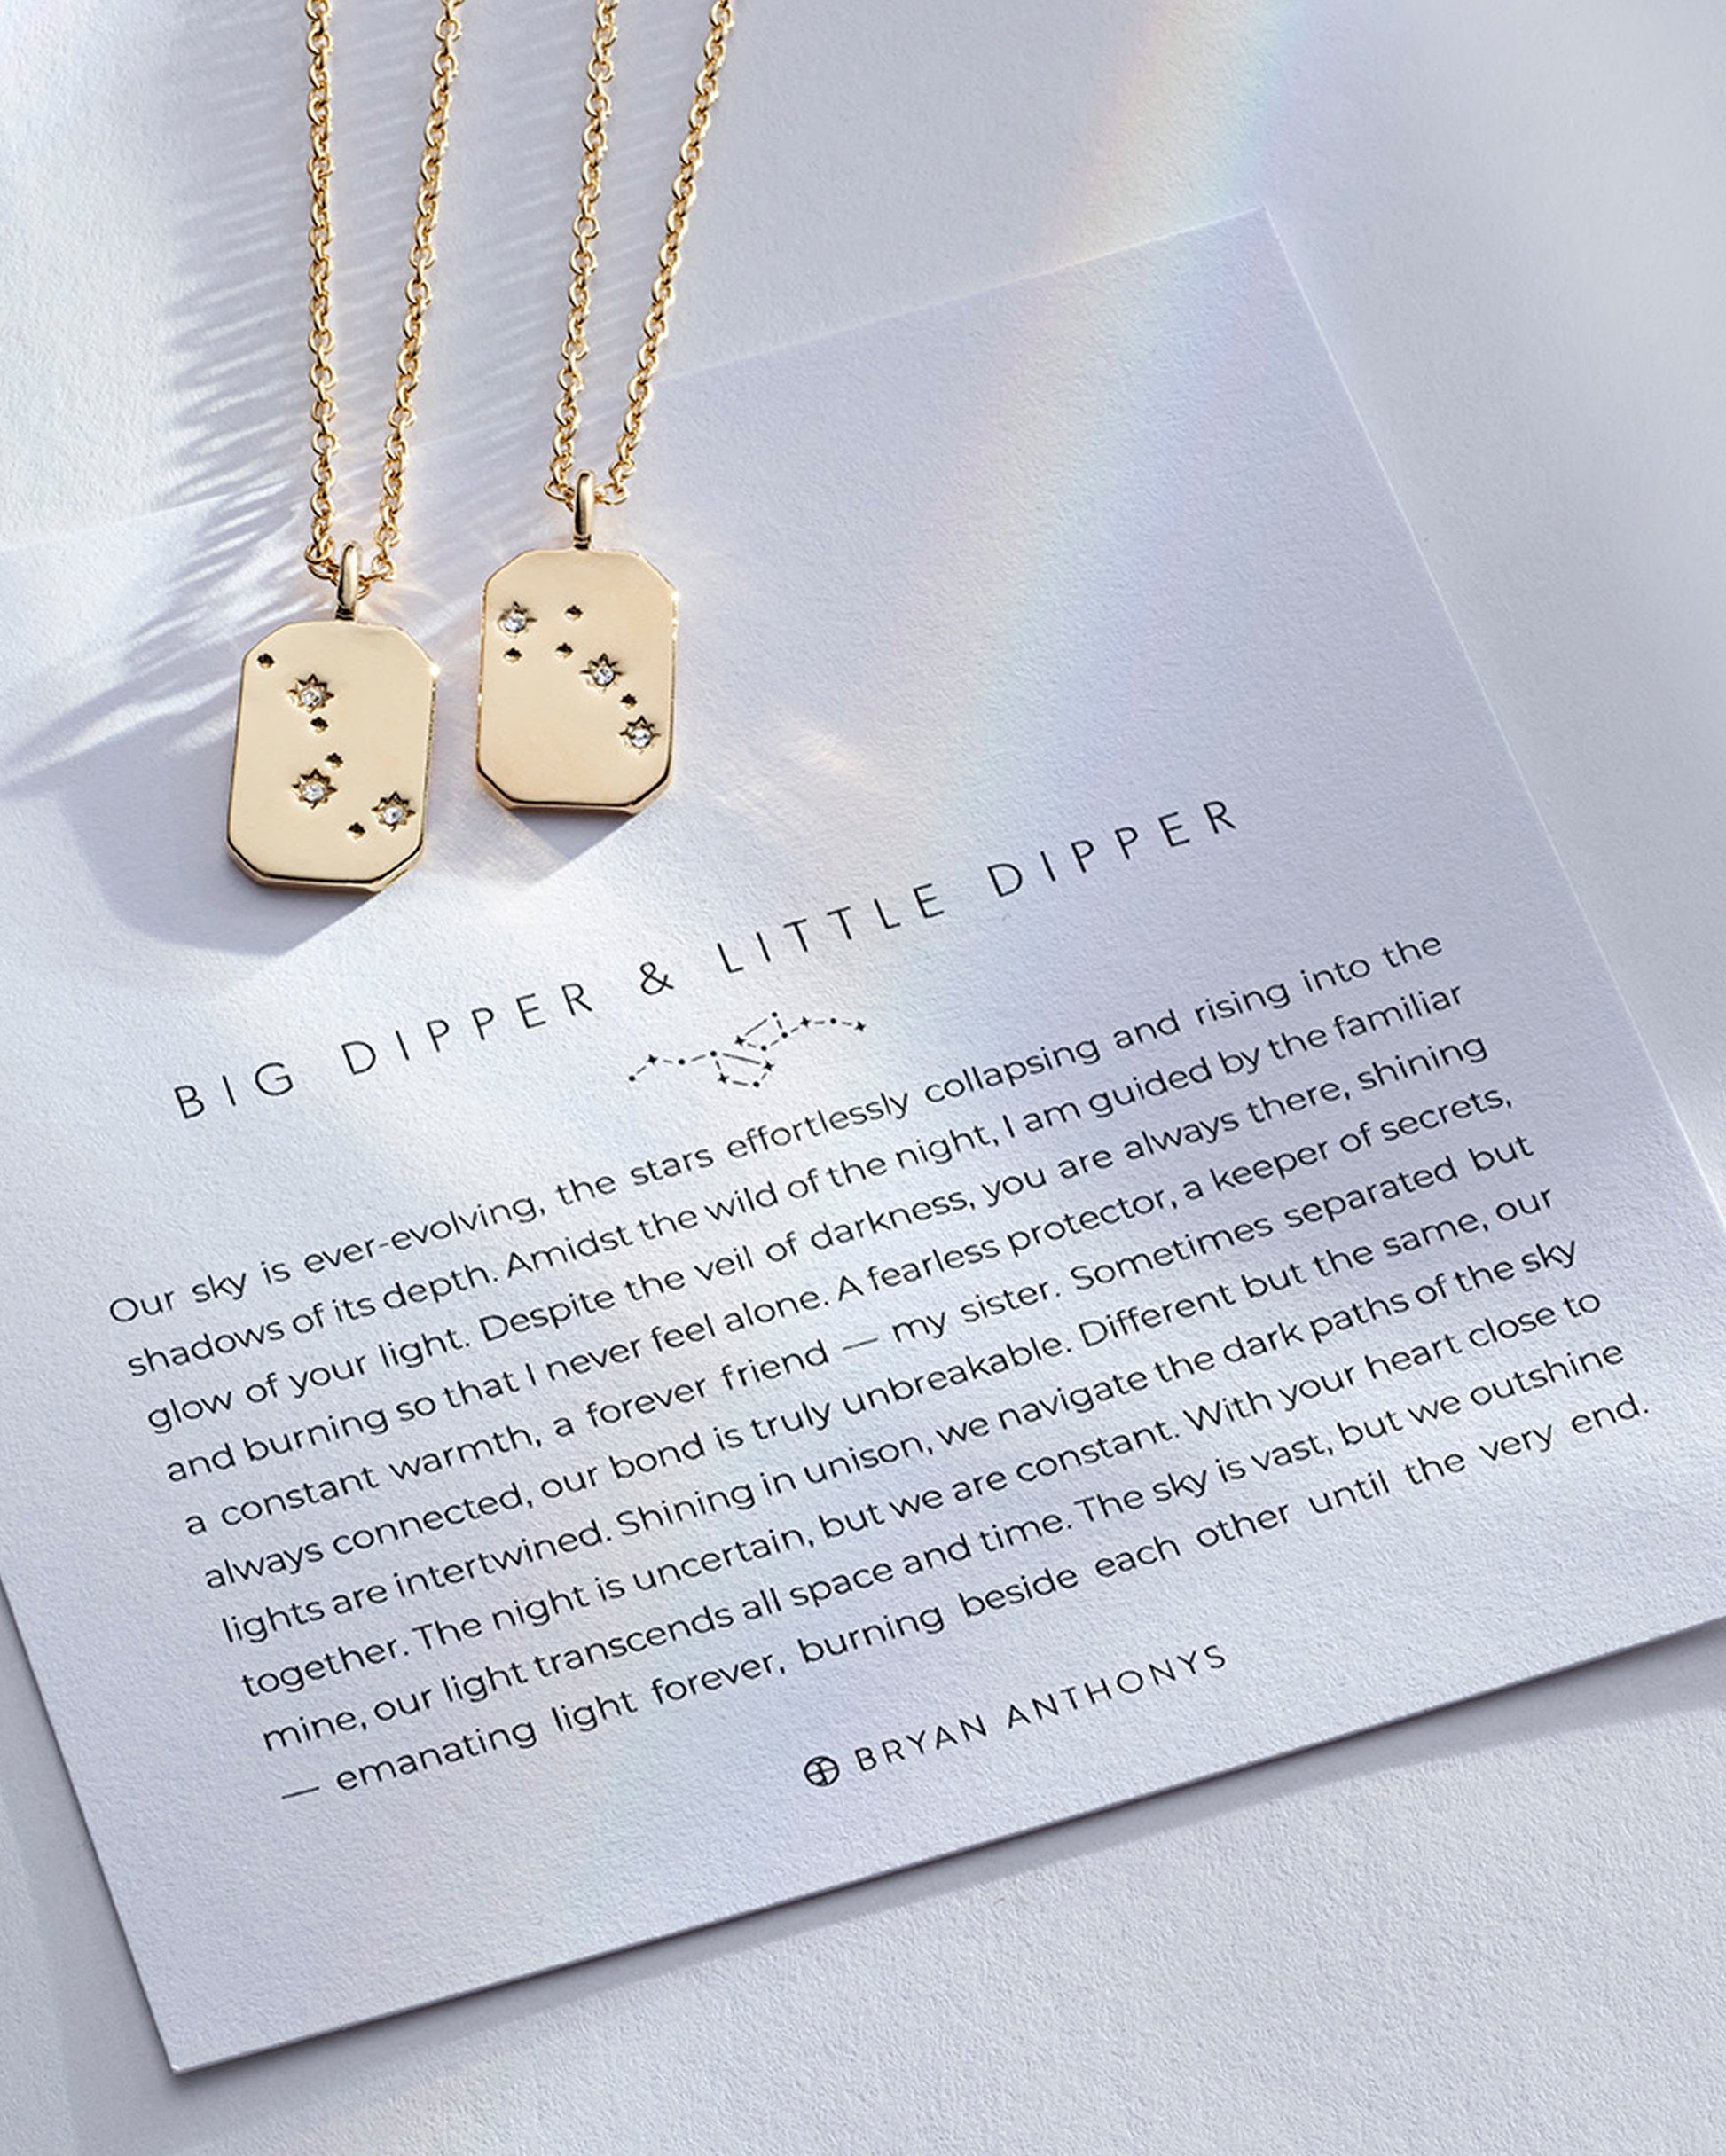 Big Dipper & Little Dipper Necklace Set showcase in 14k gold on card